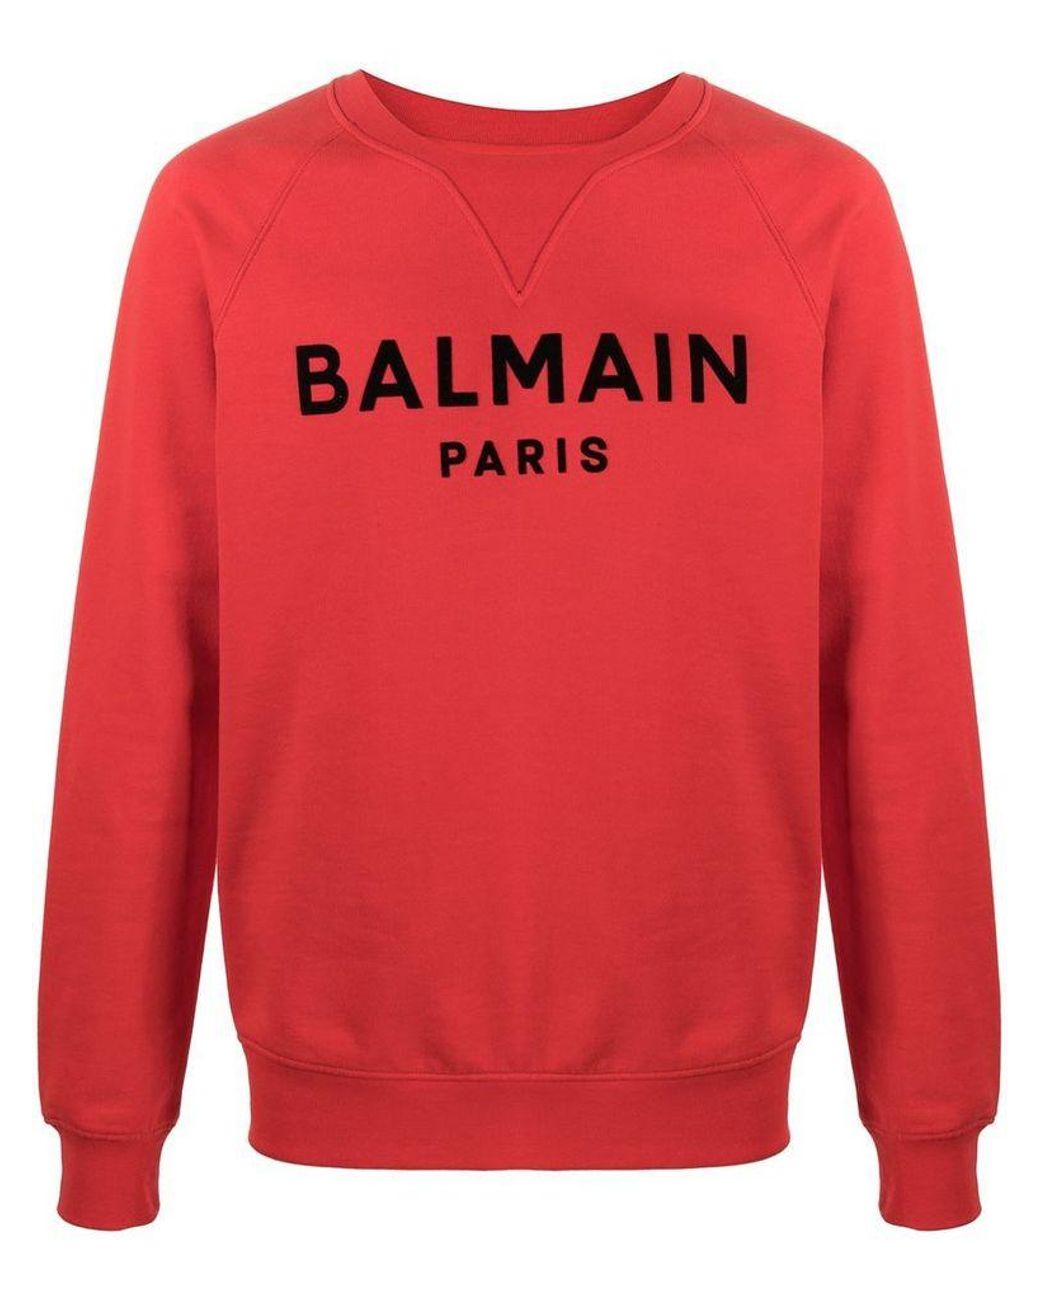 Balmain Men's Vh1jq005b0423kf Red Cotton Sweatshirt for Men - Lyst